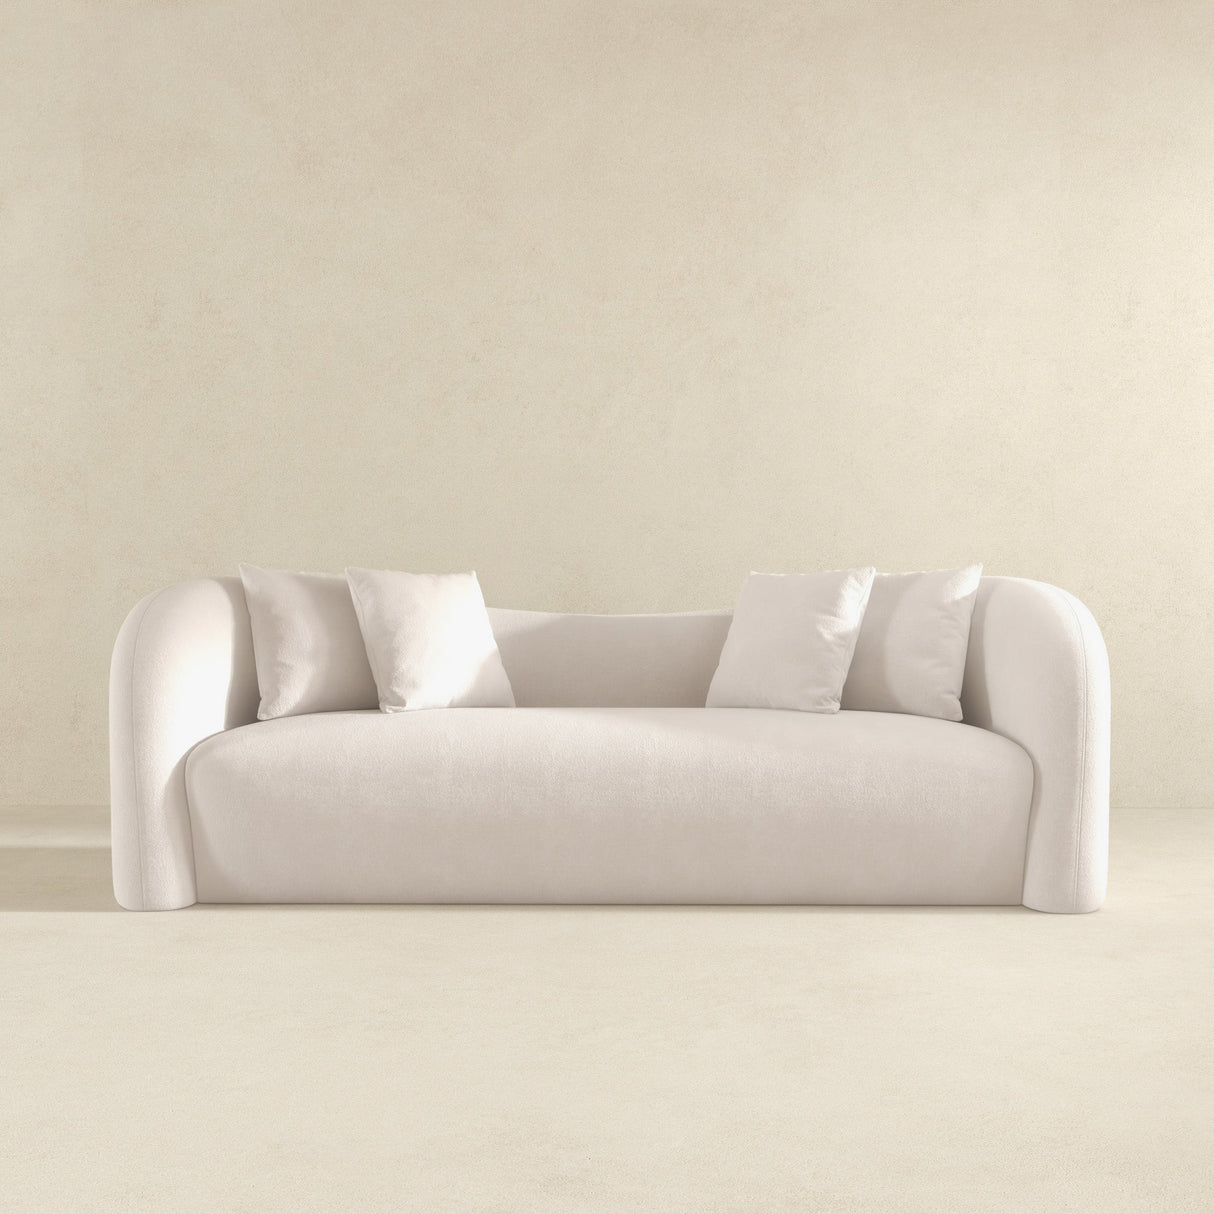 Midcentury modern sofa